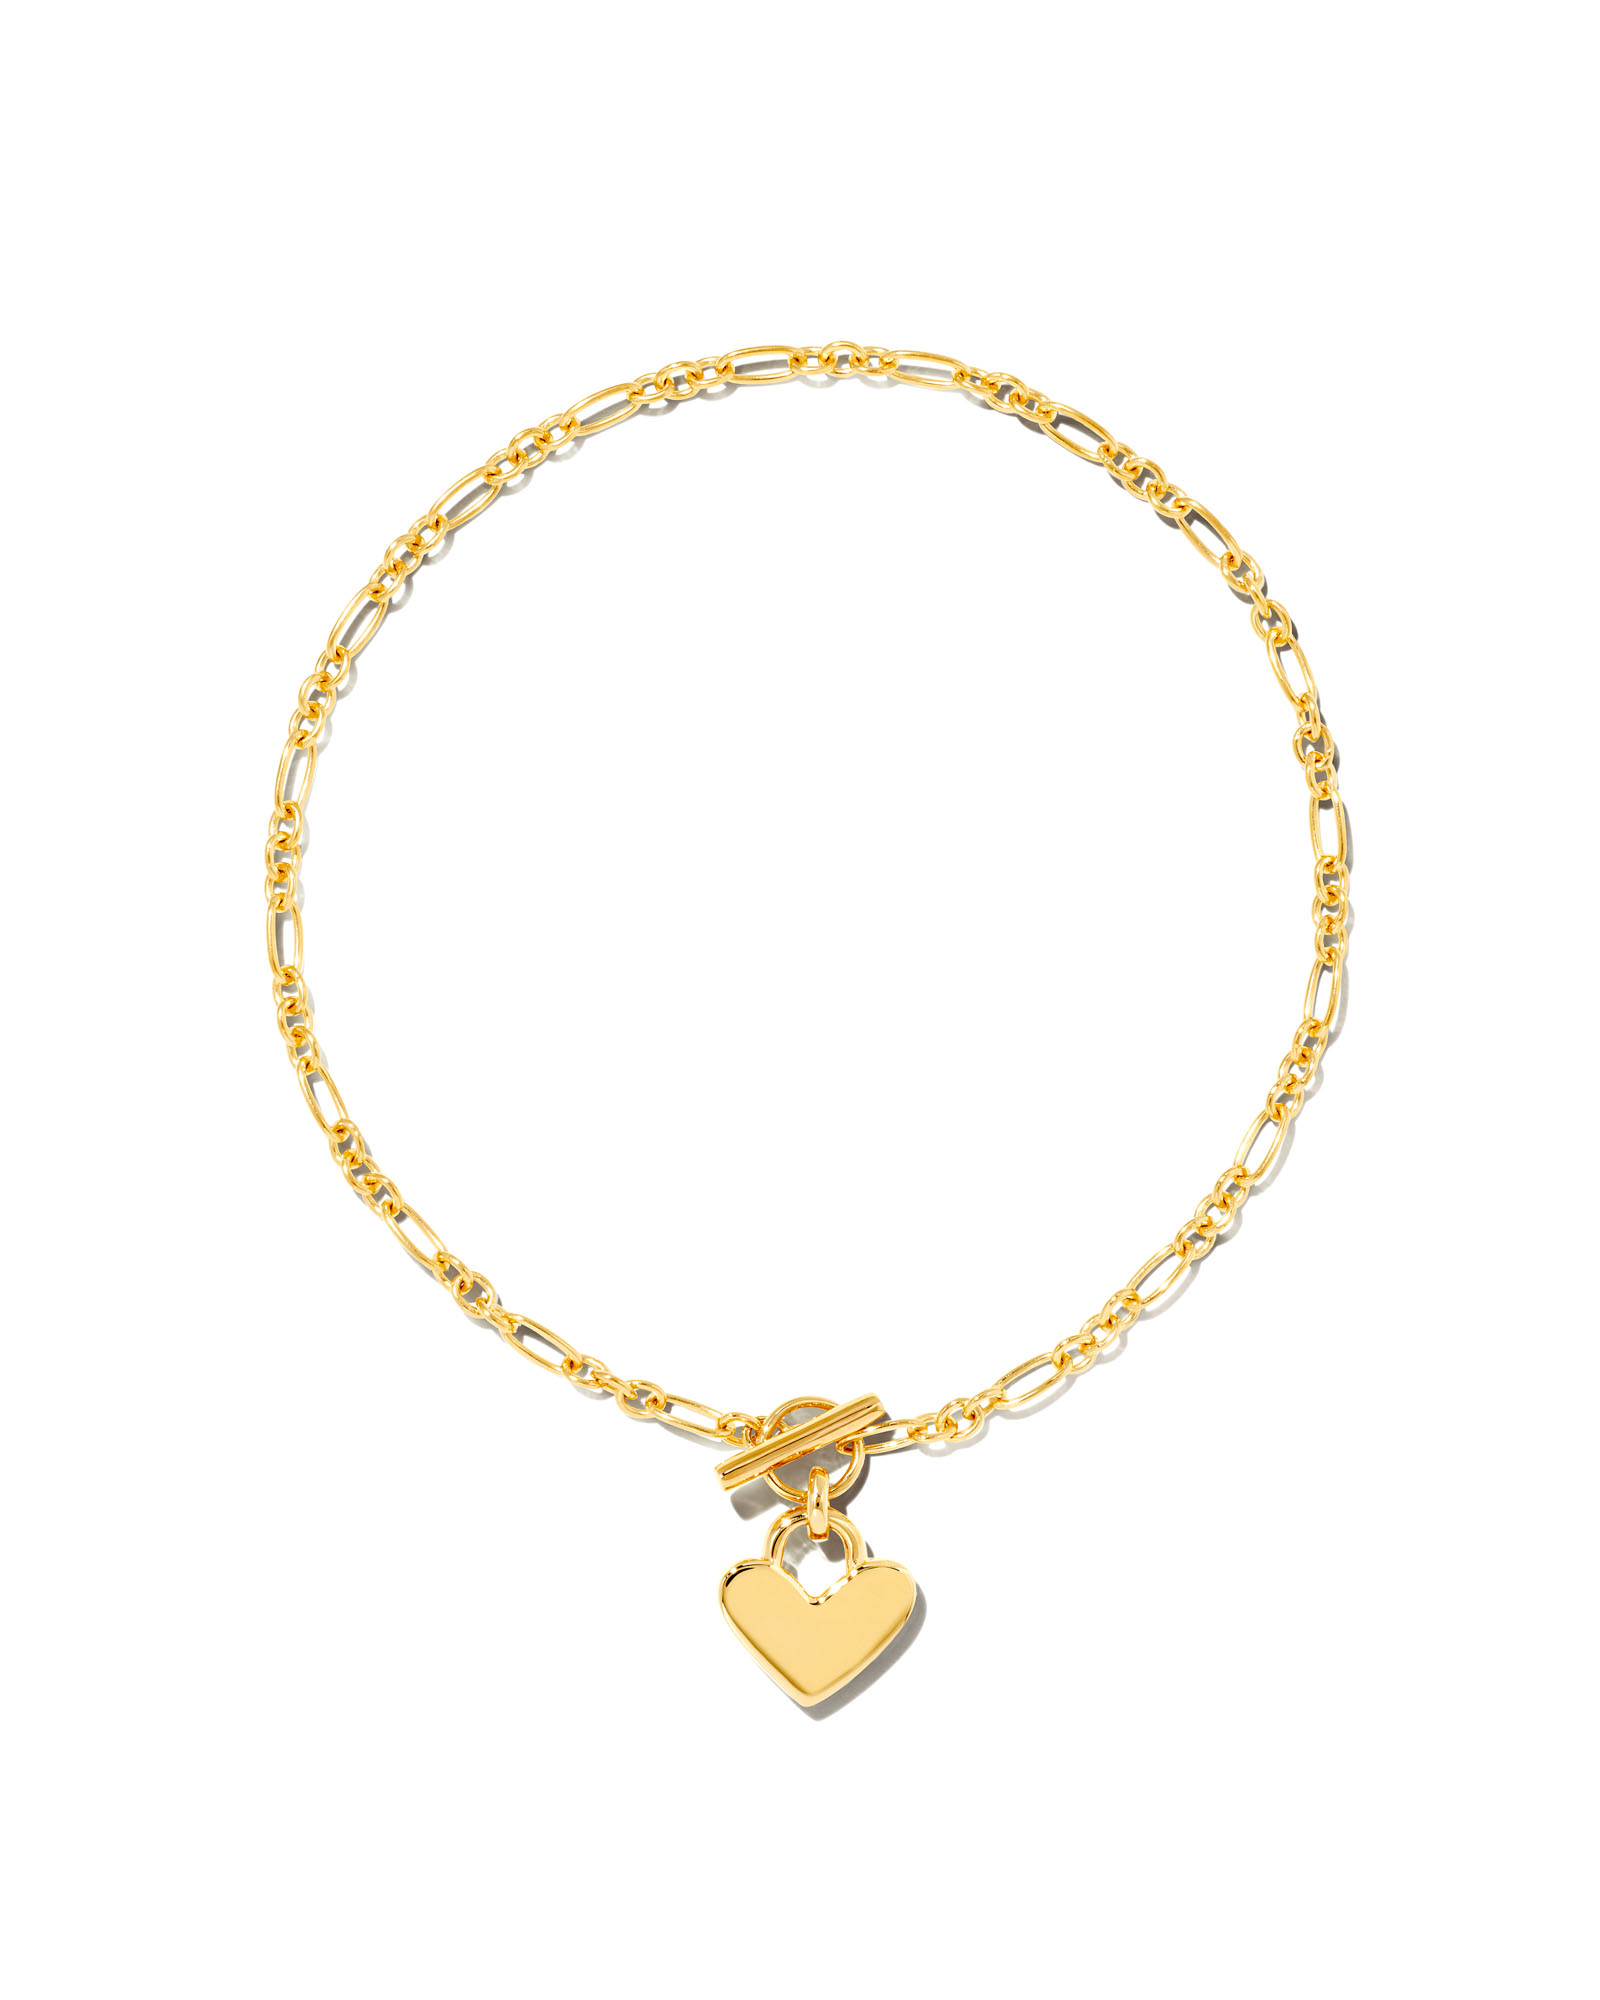 Bulk Jewelry Fashion 14K Gold Kids Bracelets Sold At A Low Price